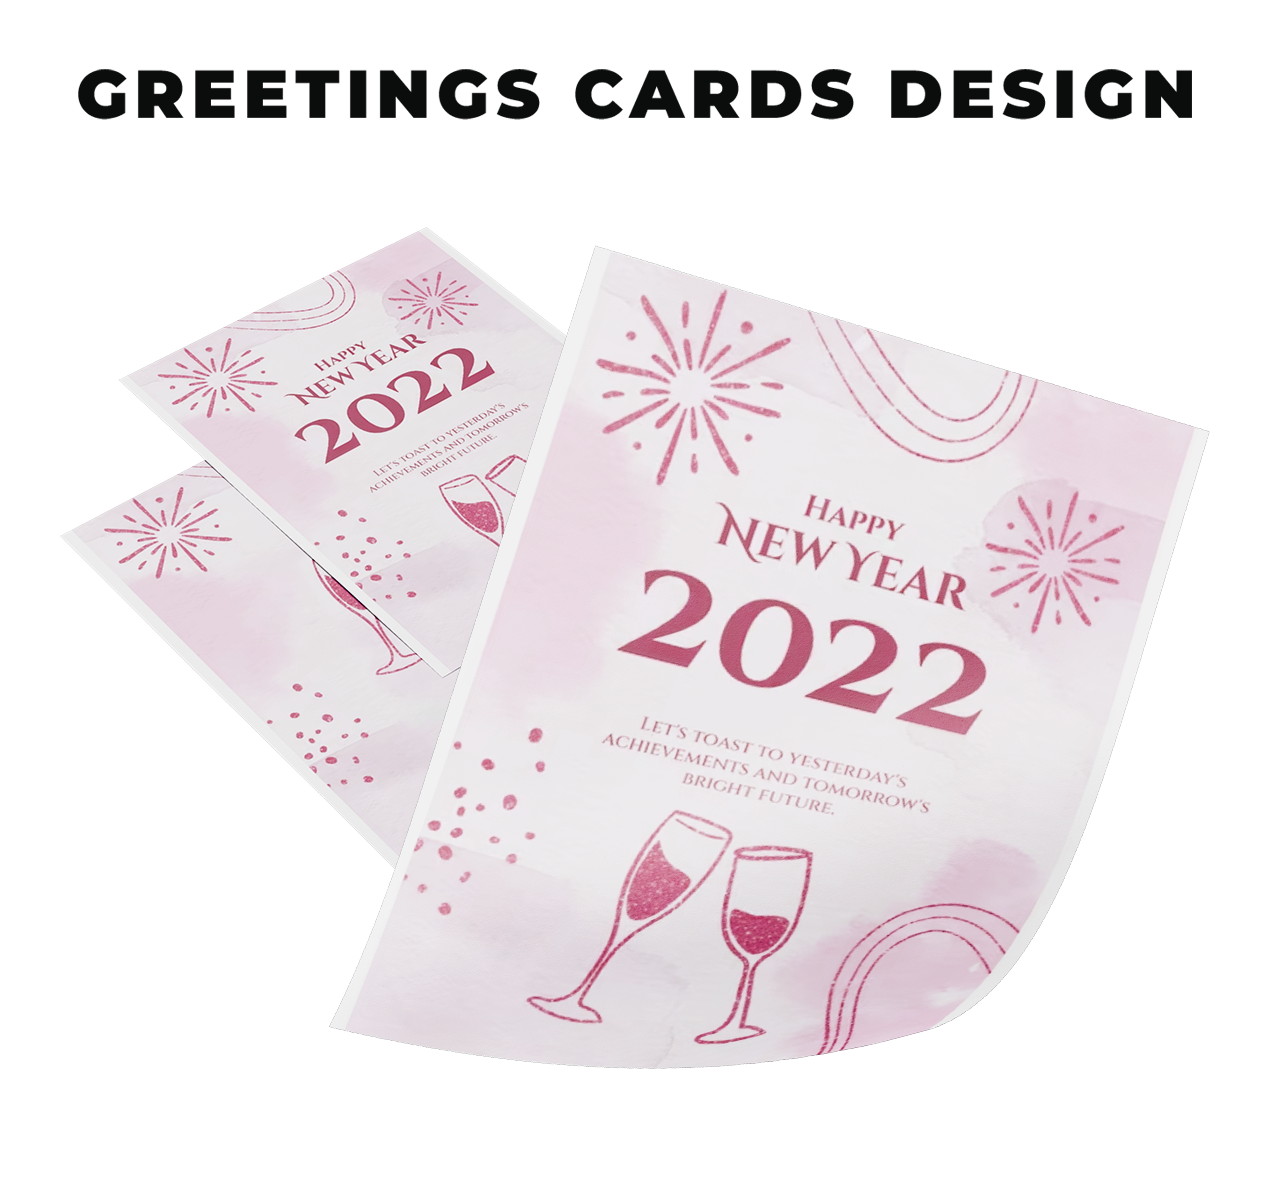 Greetings Cards Design